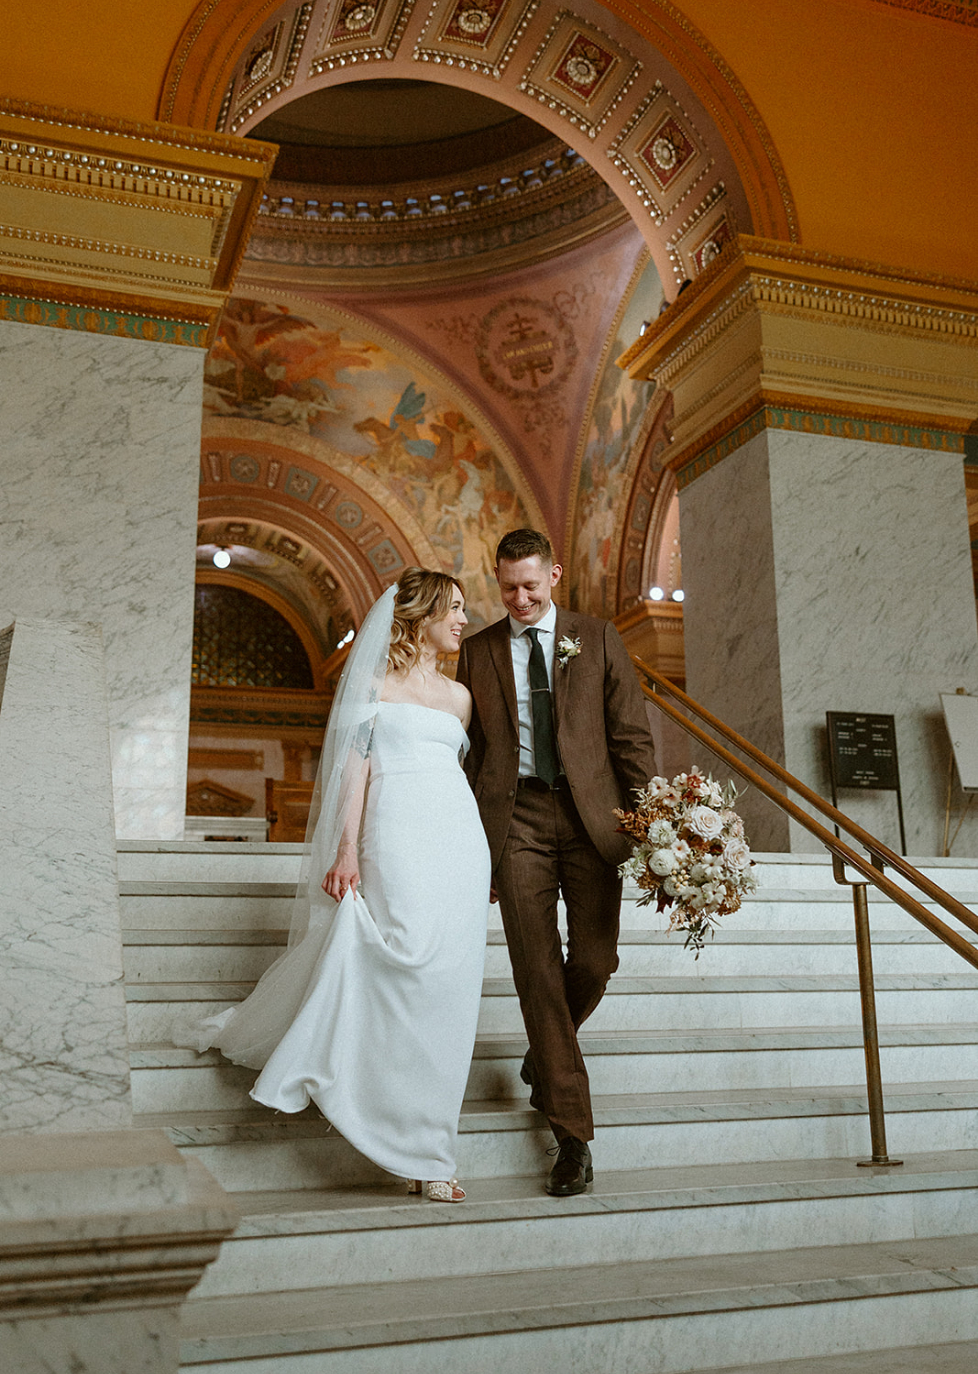 Emma-Knutson-Photography-Indianapolis-Wedding-H+E--413_websize.png